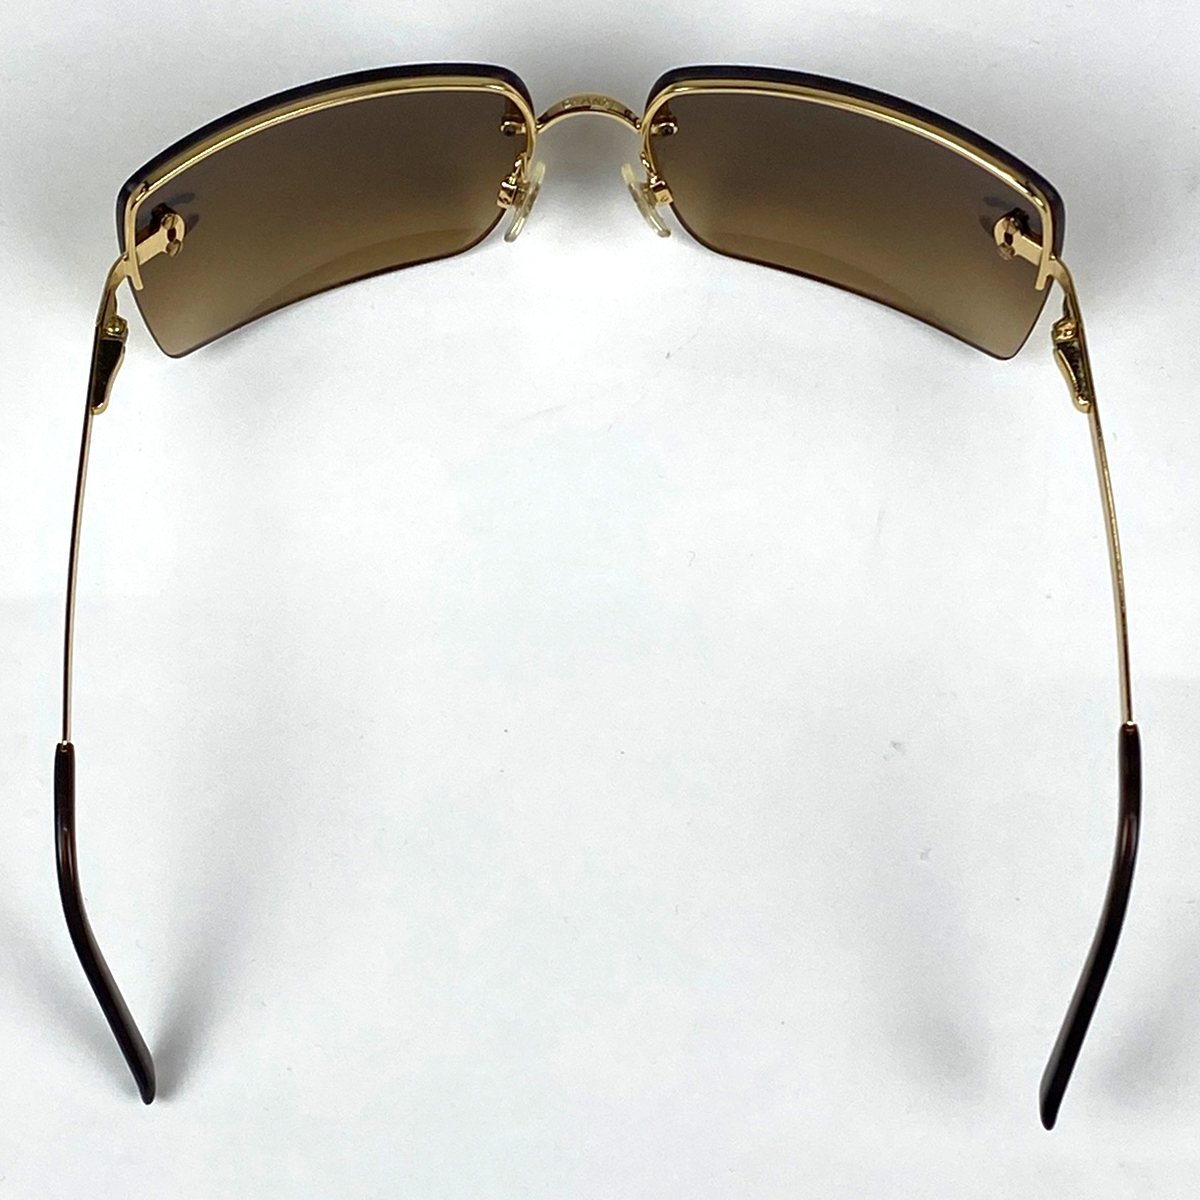  Chanel CHANEL here Mark sunglasses half rim rhinestone sunglasses metal Brown 4092B lady's [ used ]